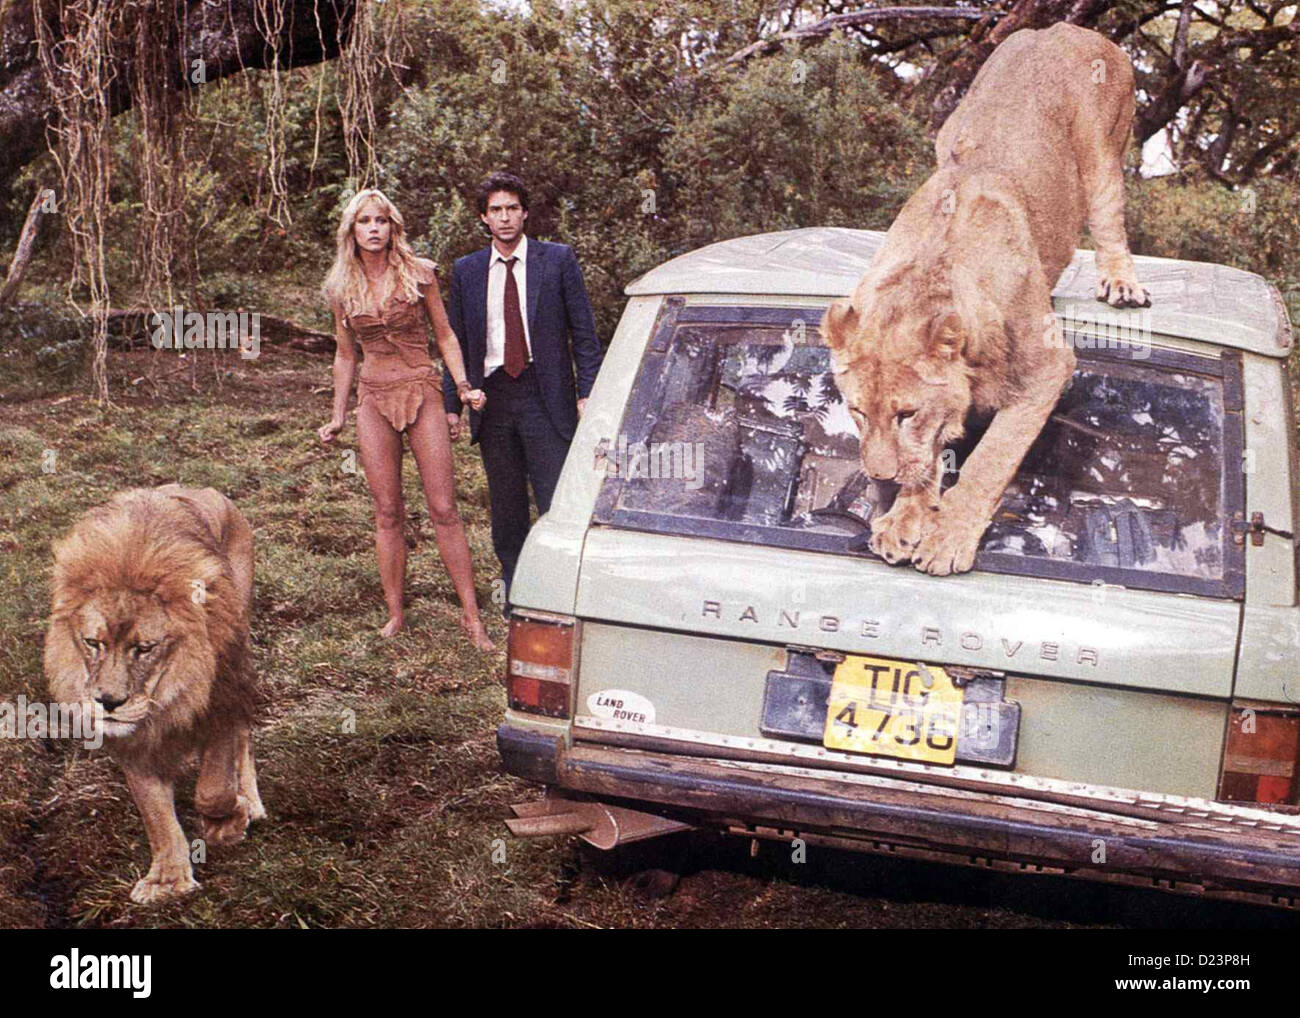 Sheena - Koenigin Des Dschungels   Sheena Queen Of The Jungle   Tanya Roberts, Ted Wass *** Local Caption *** 1984  -- Stock Photo